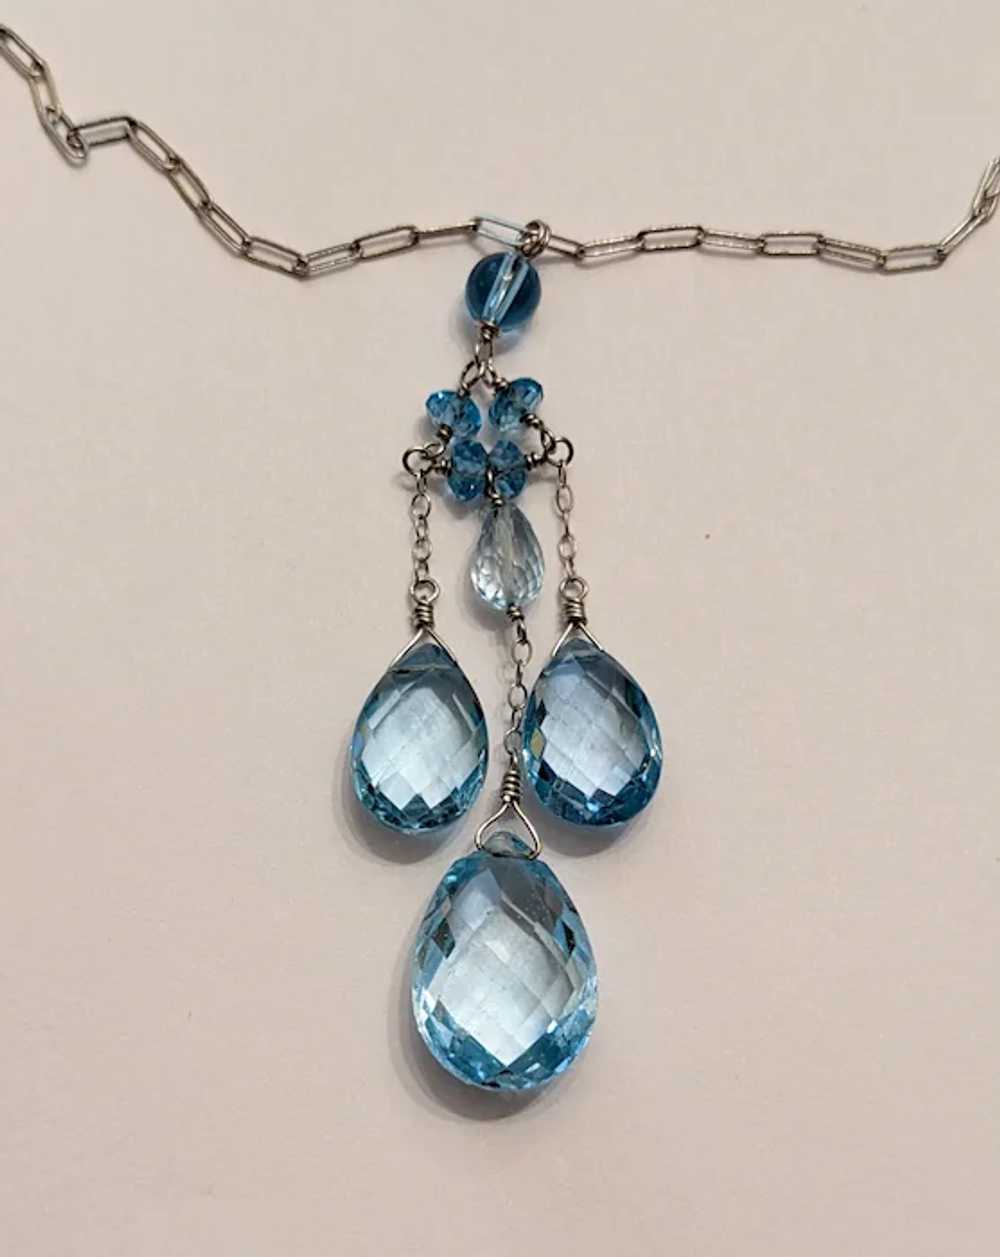 Vintage 10k White Gold And Blue Topaz Necklace - image 2